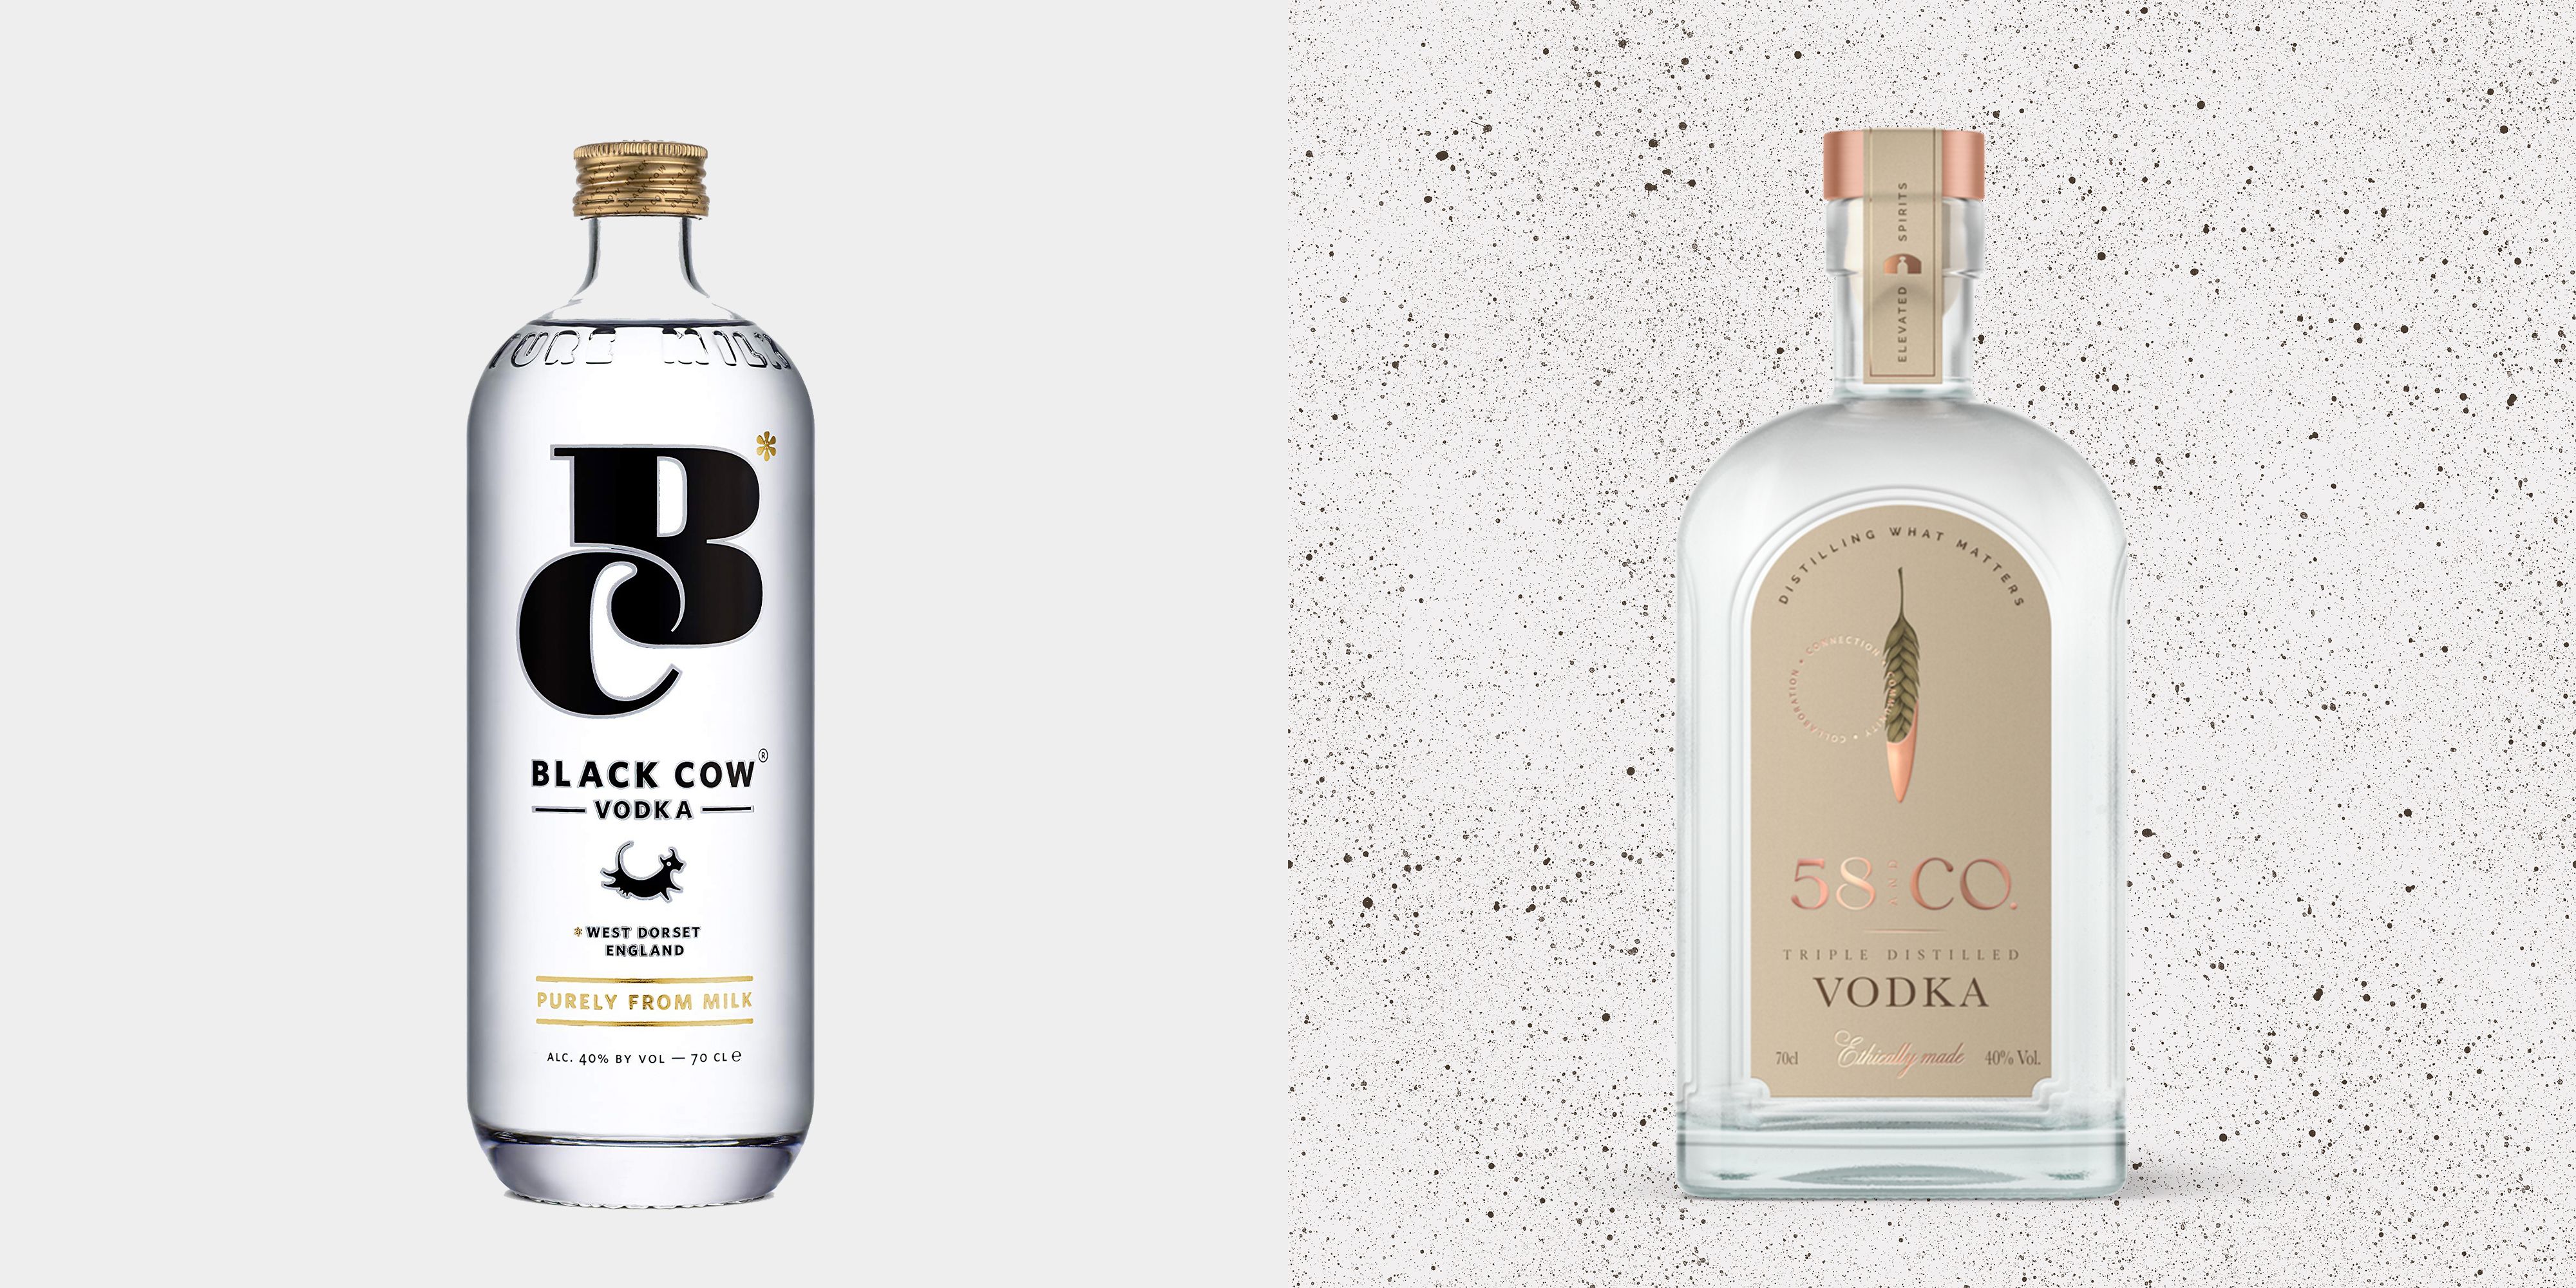 Belvedere Citrus Vodka : Buy from World's Best Drinks Shop